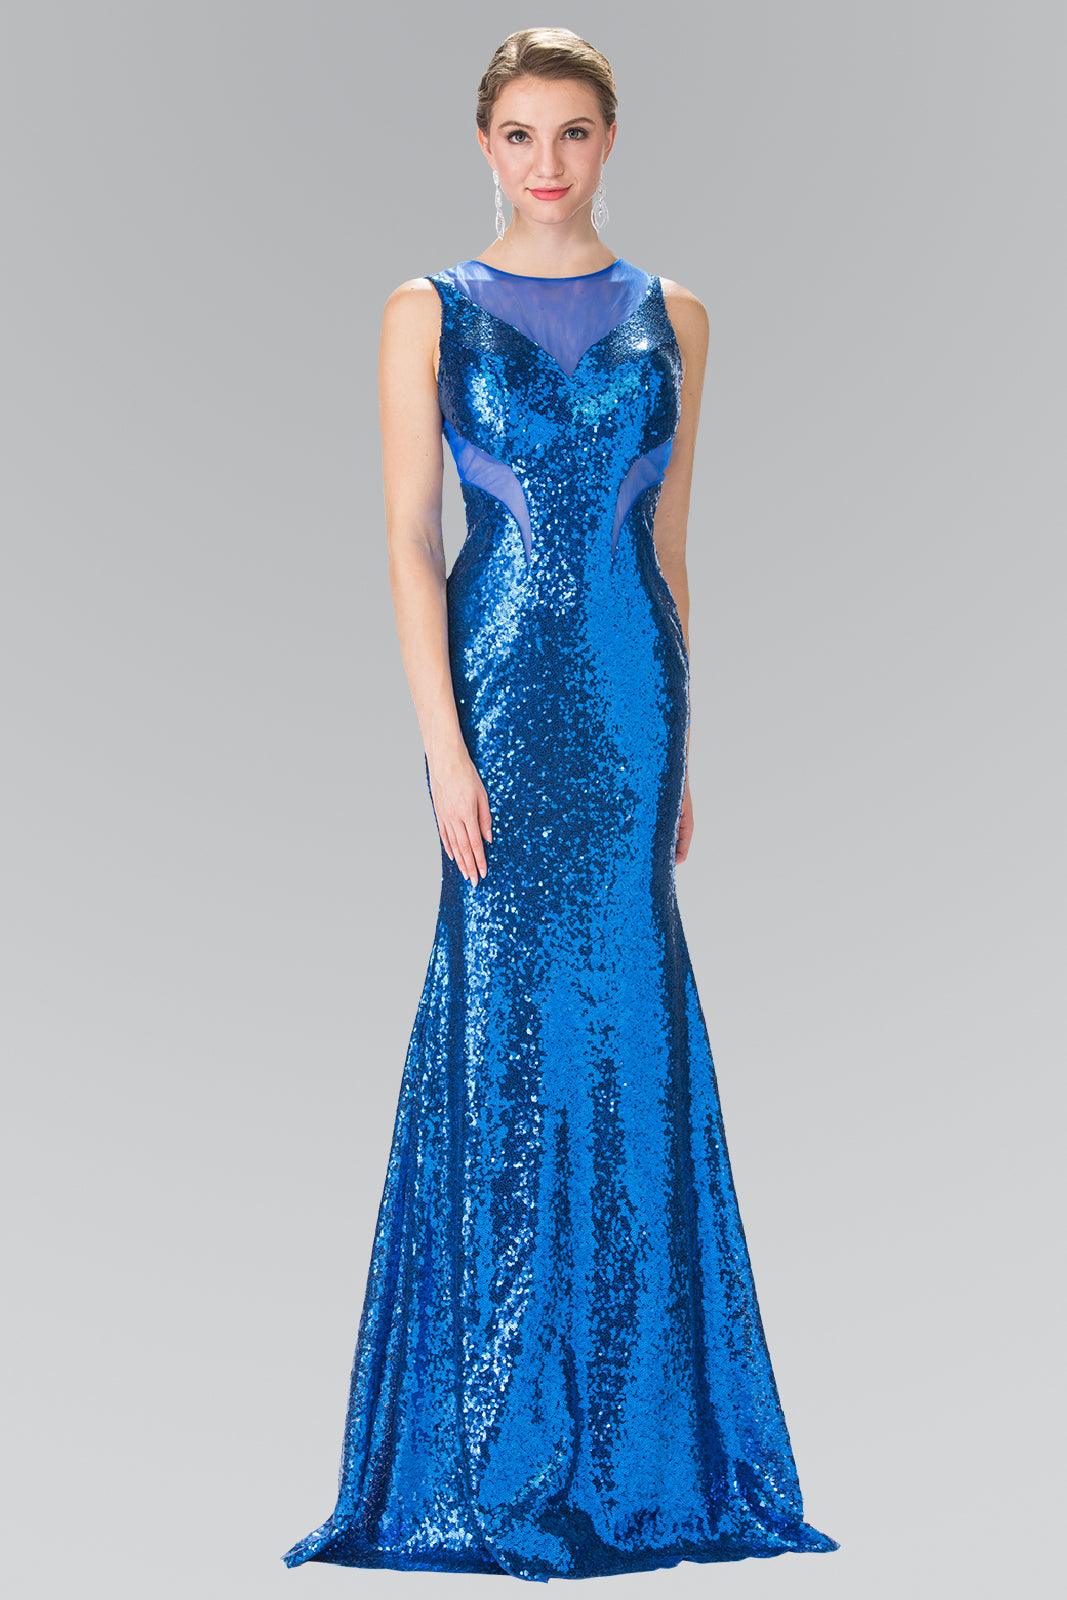 Long Fully Sequins Gown Prom Dress Formal - The Dress Outlet Elizabeth K